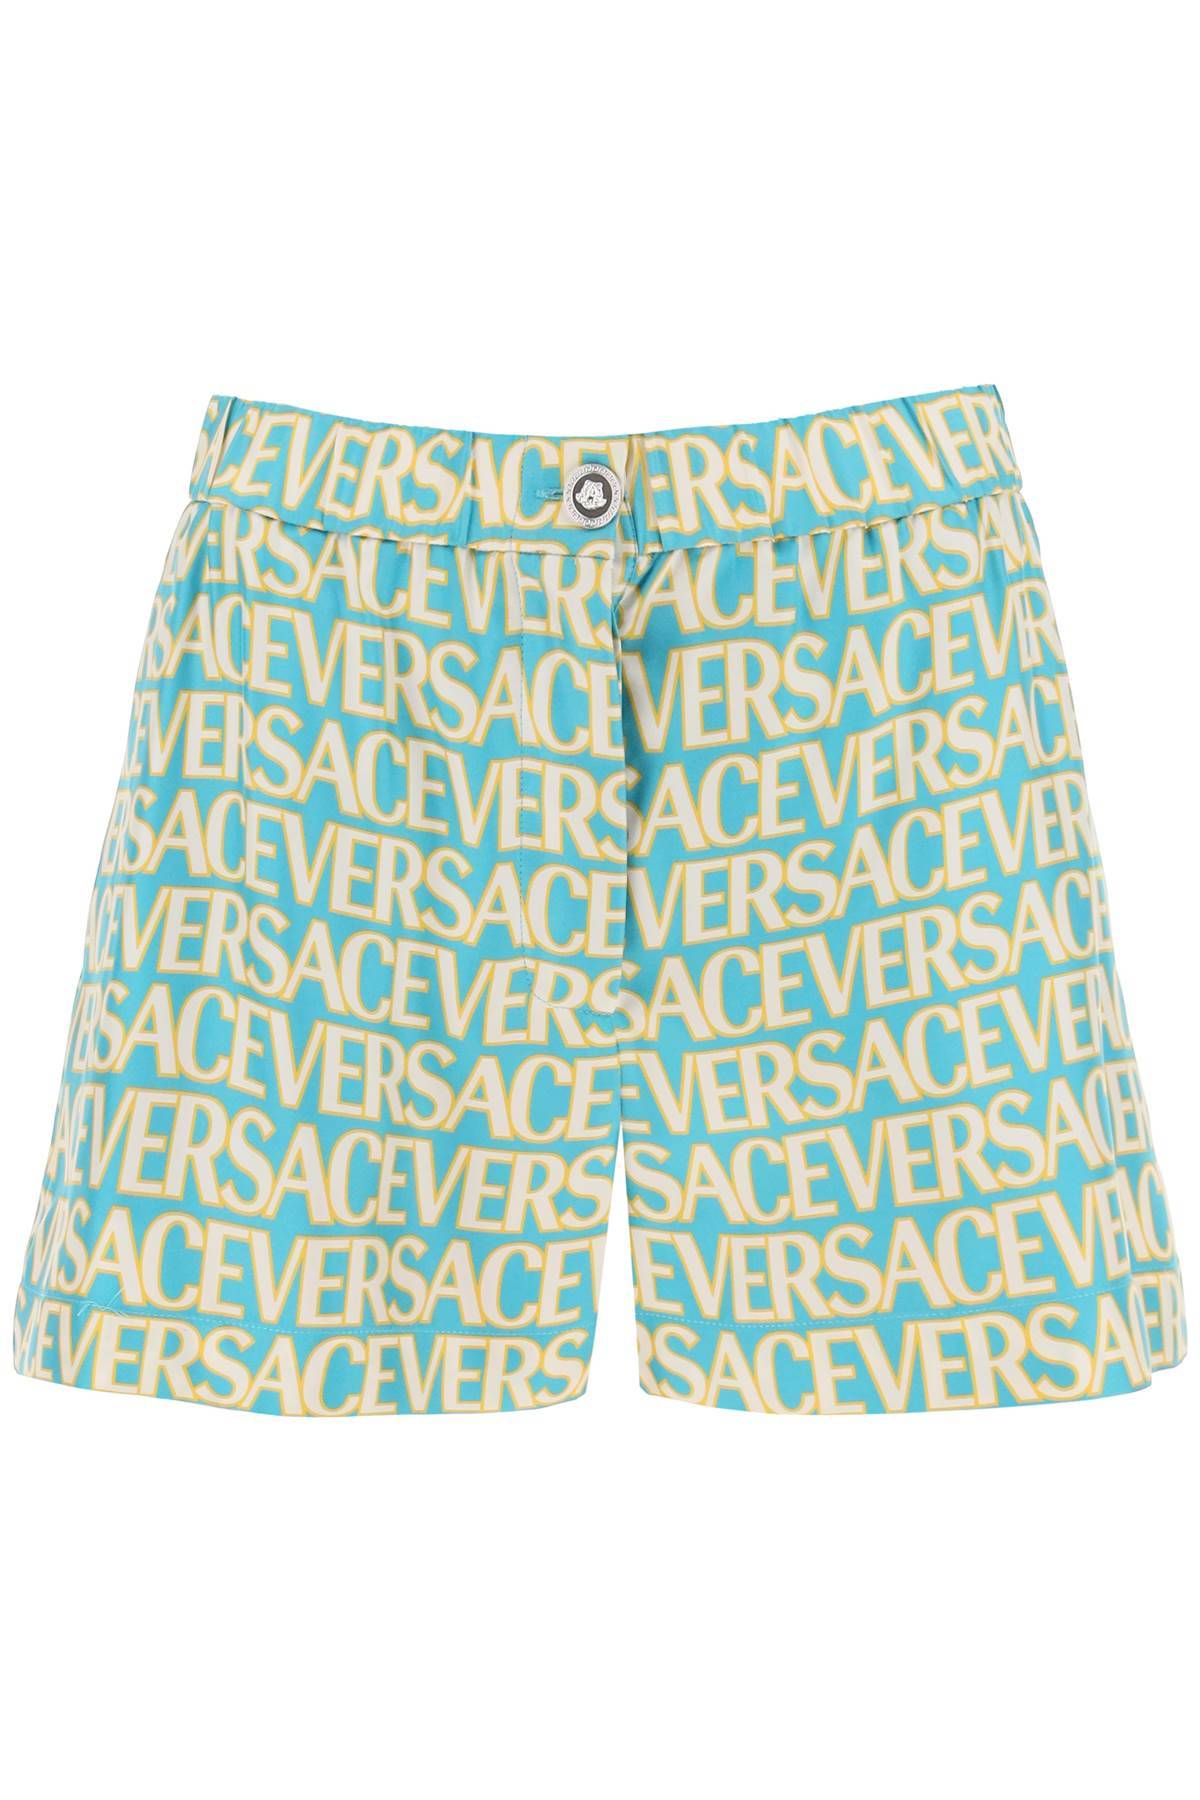 Versace VERSACE monogram print silk shorts